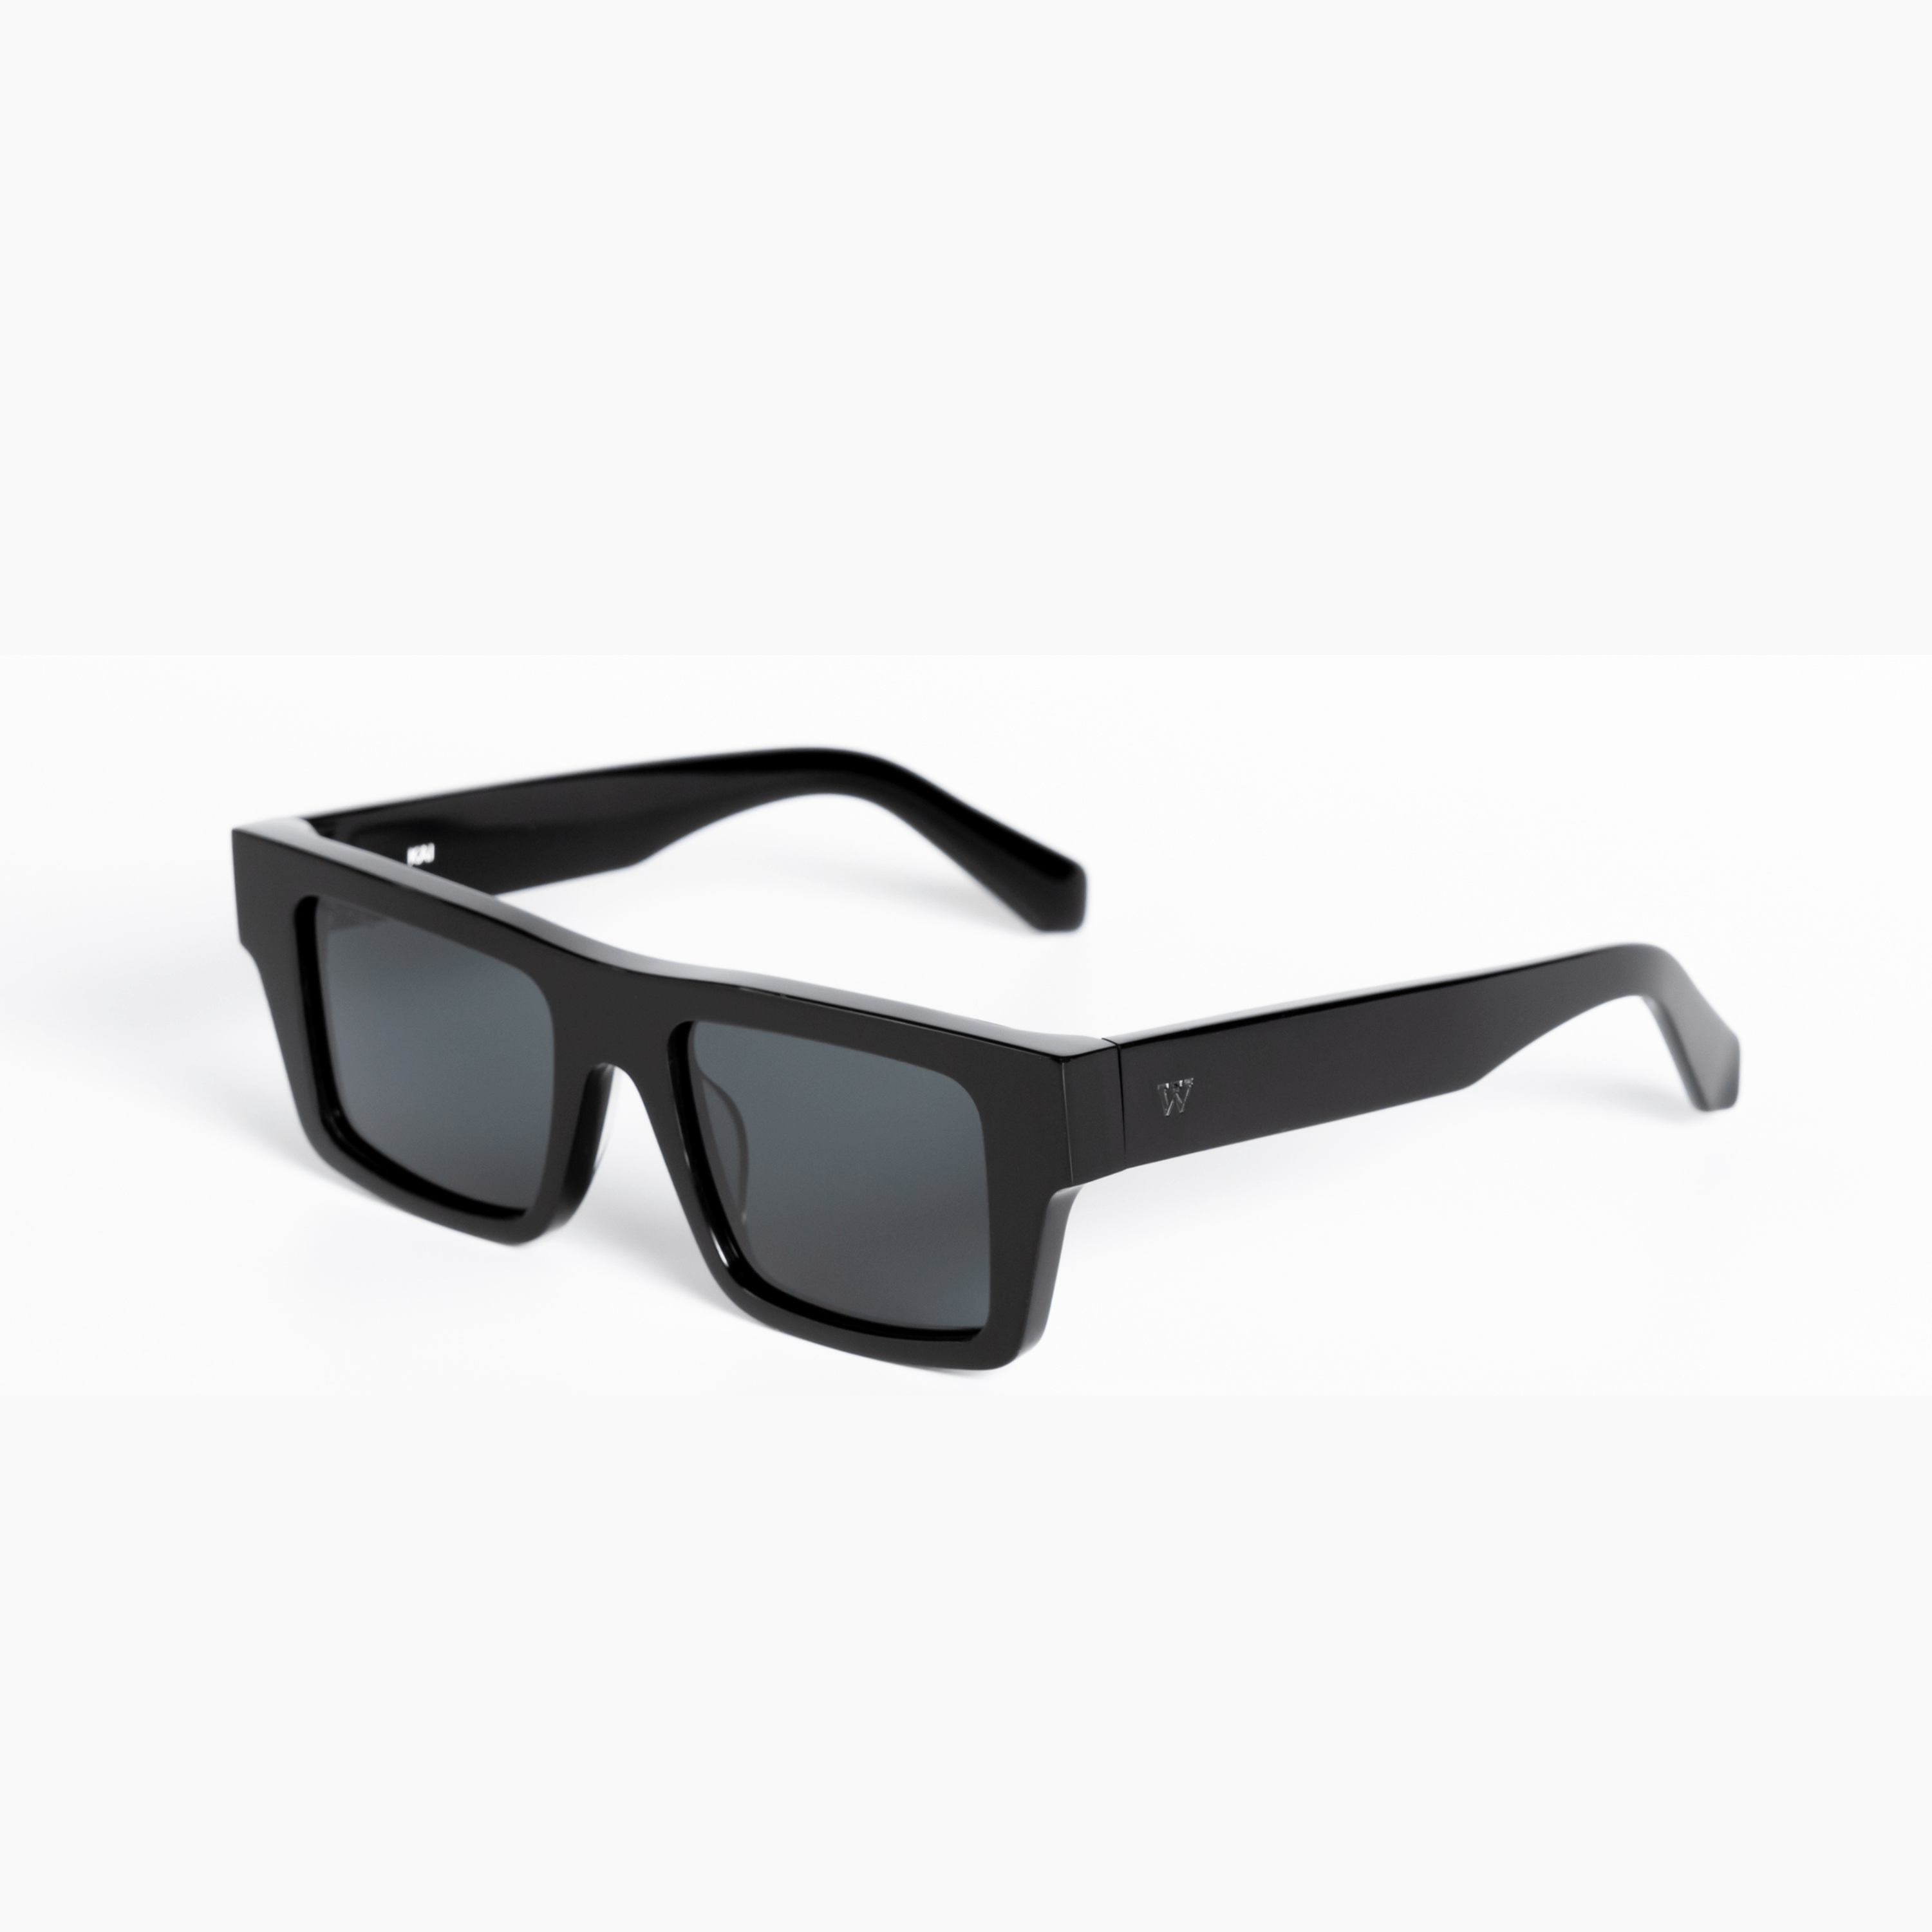 Walter Hill Sunglasses Oversized / Black / Polarized Cat.3 KAI - Black